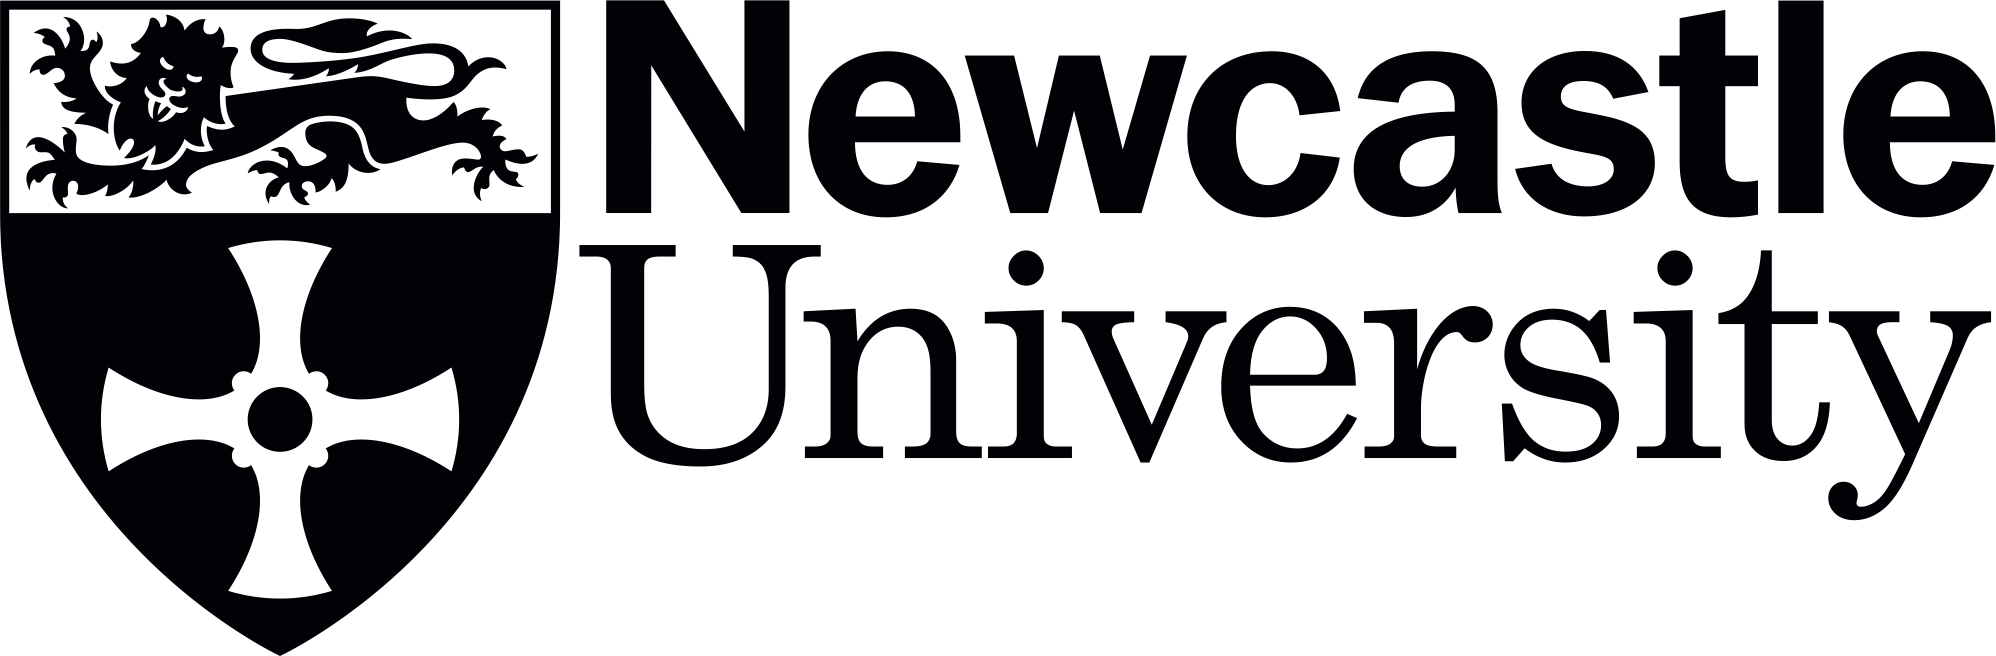 University of newcastle